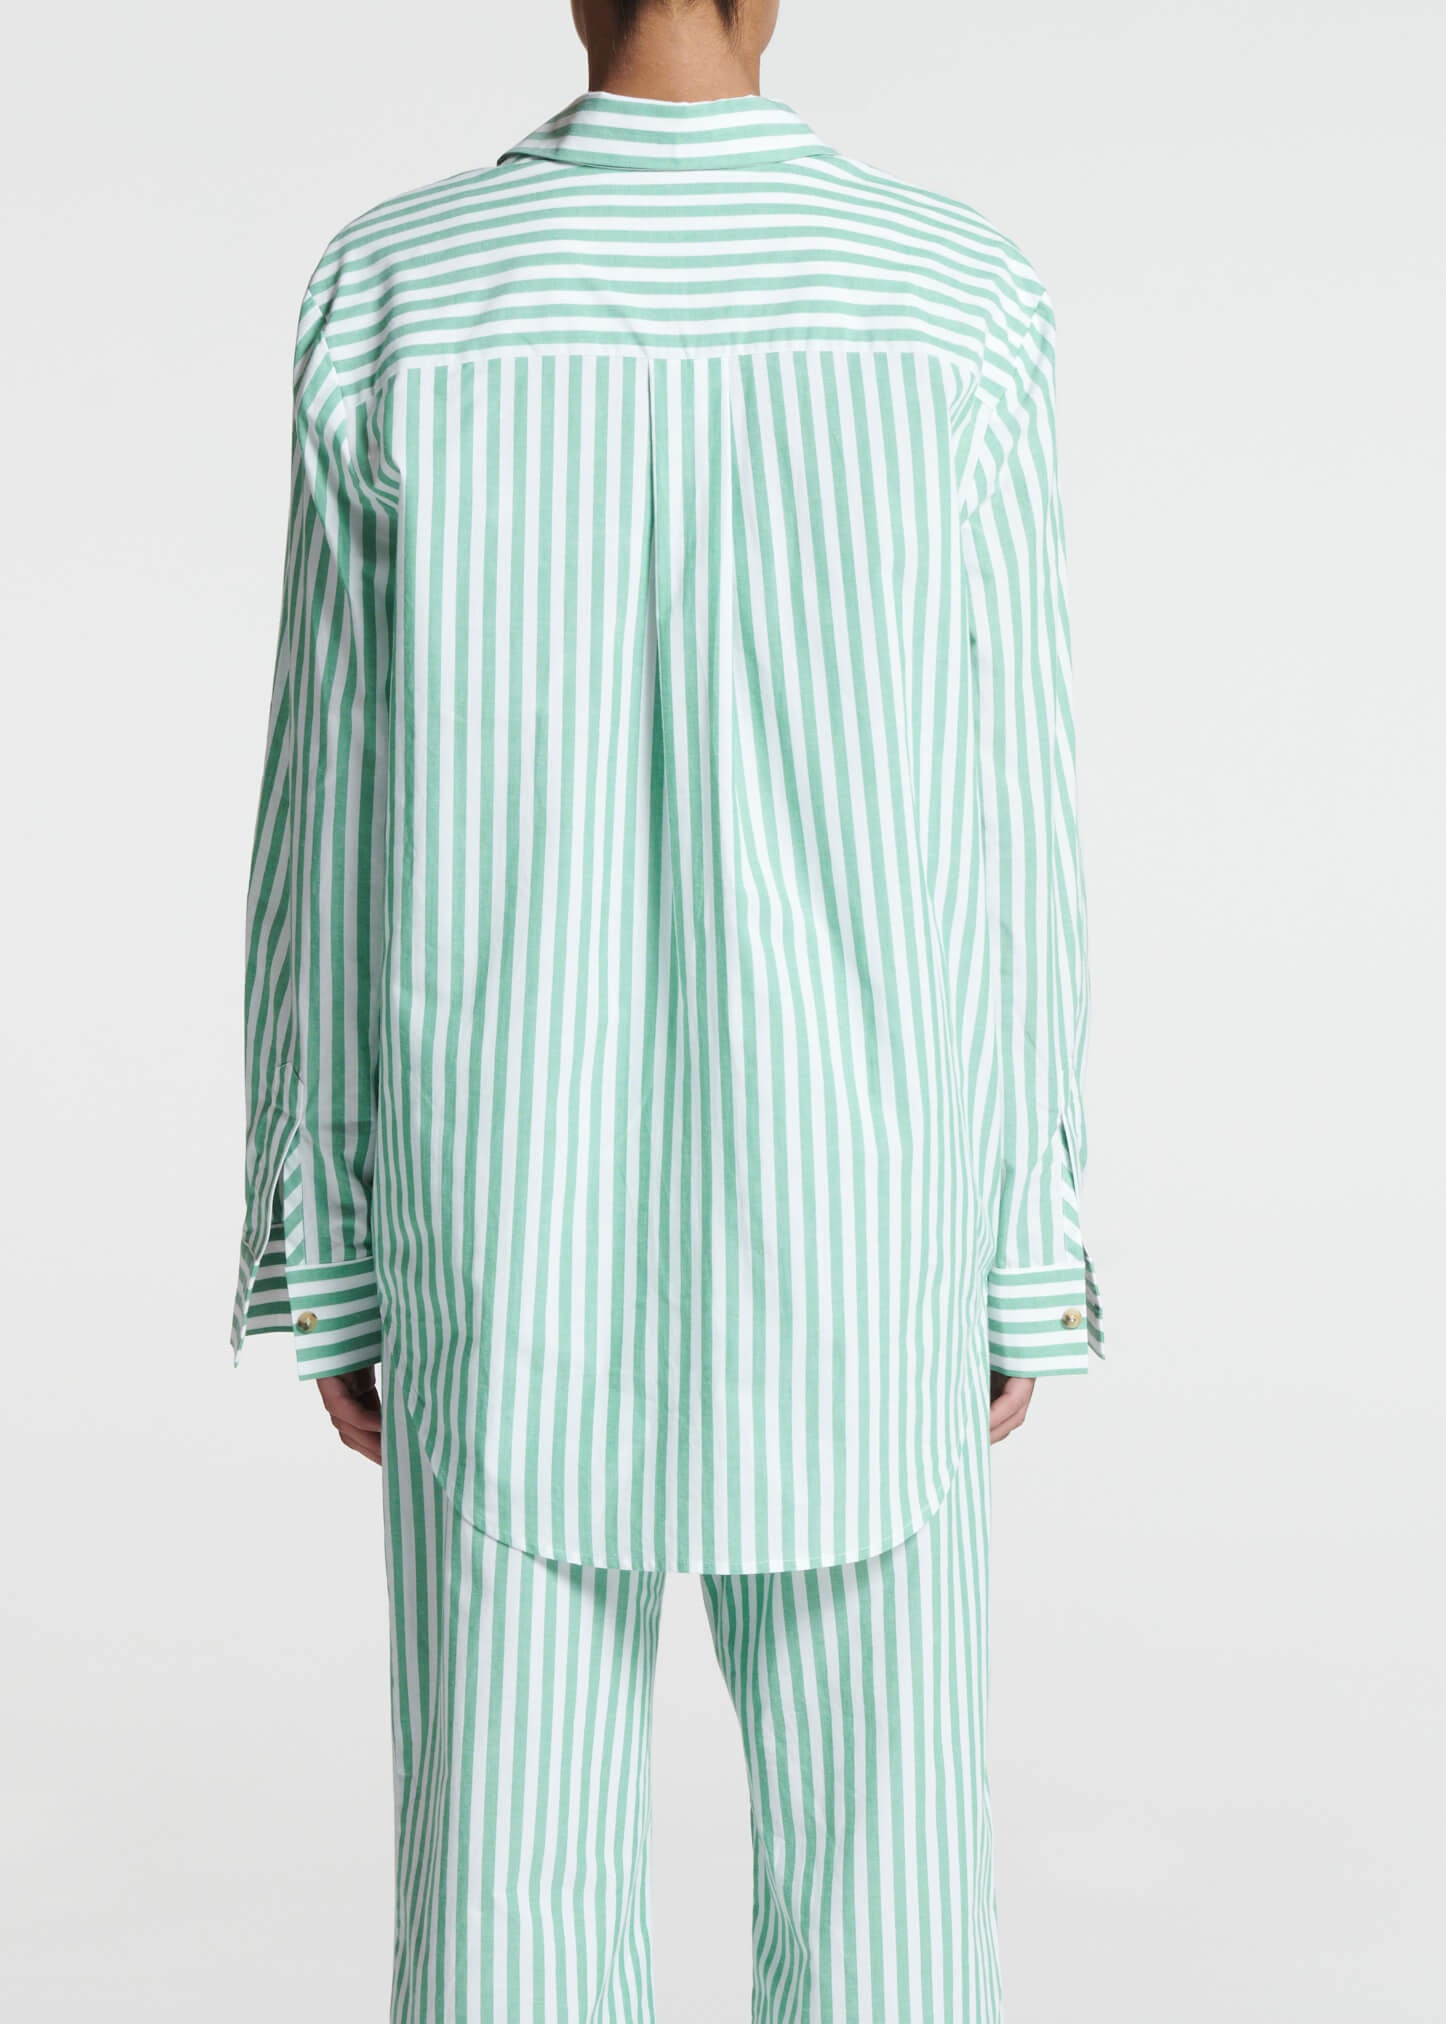 London Pyjama Top Green Stripe Cotton